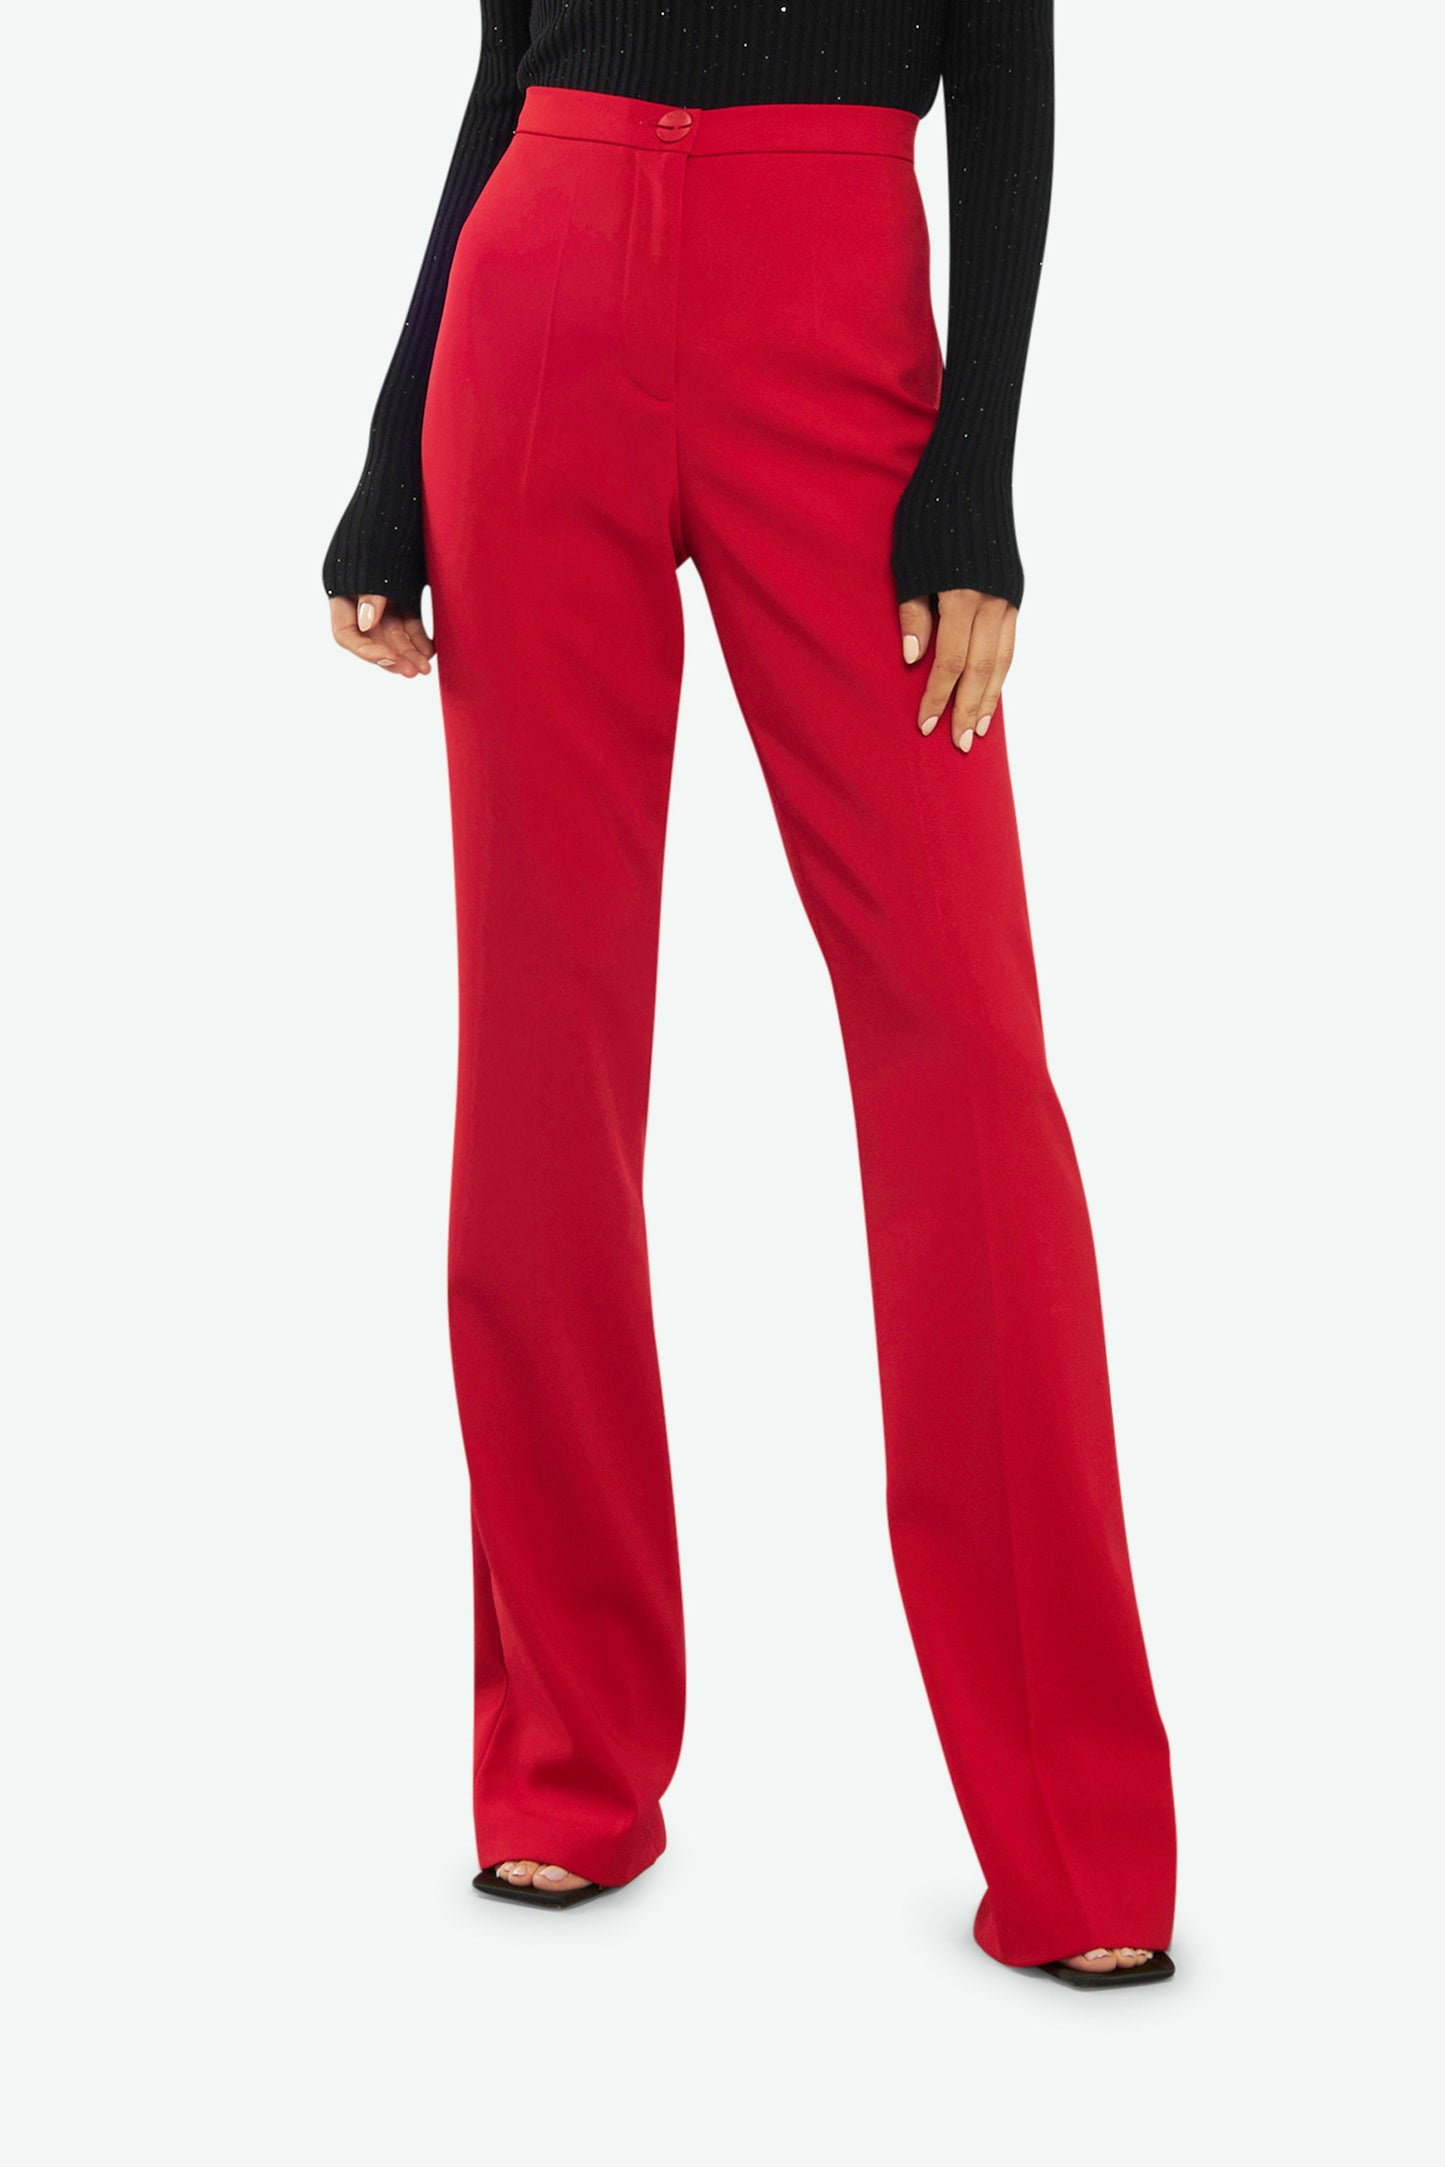 Patrizia Pepe Red High Waist Trousers